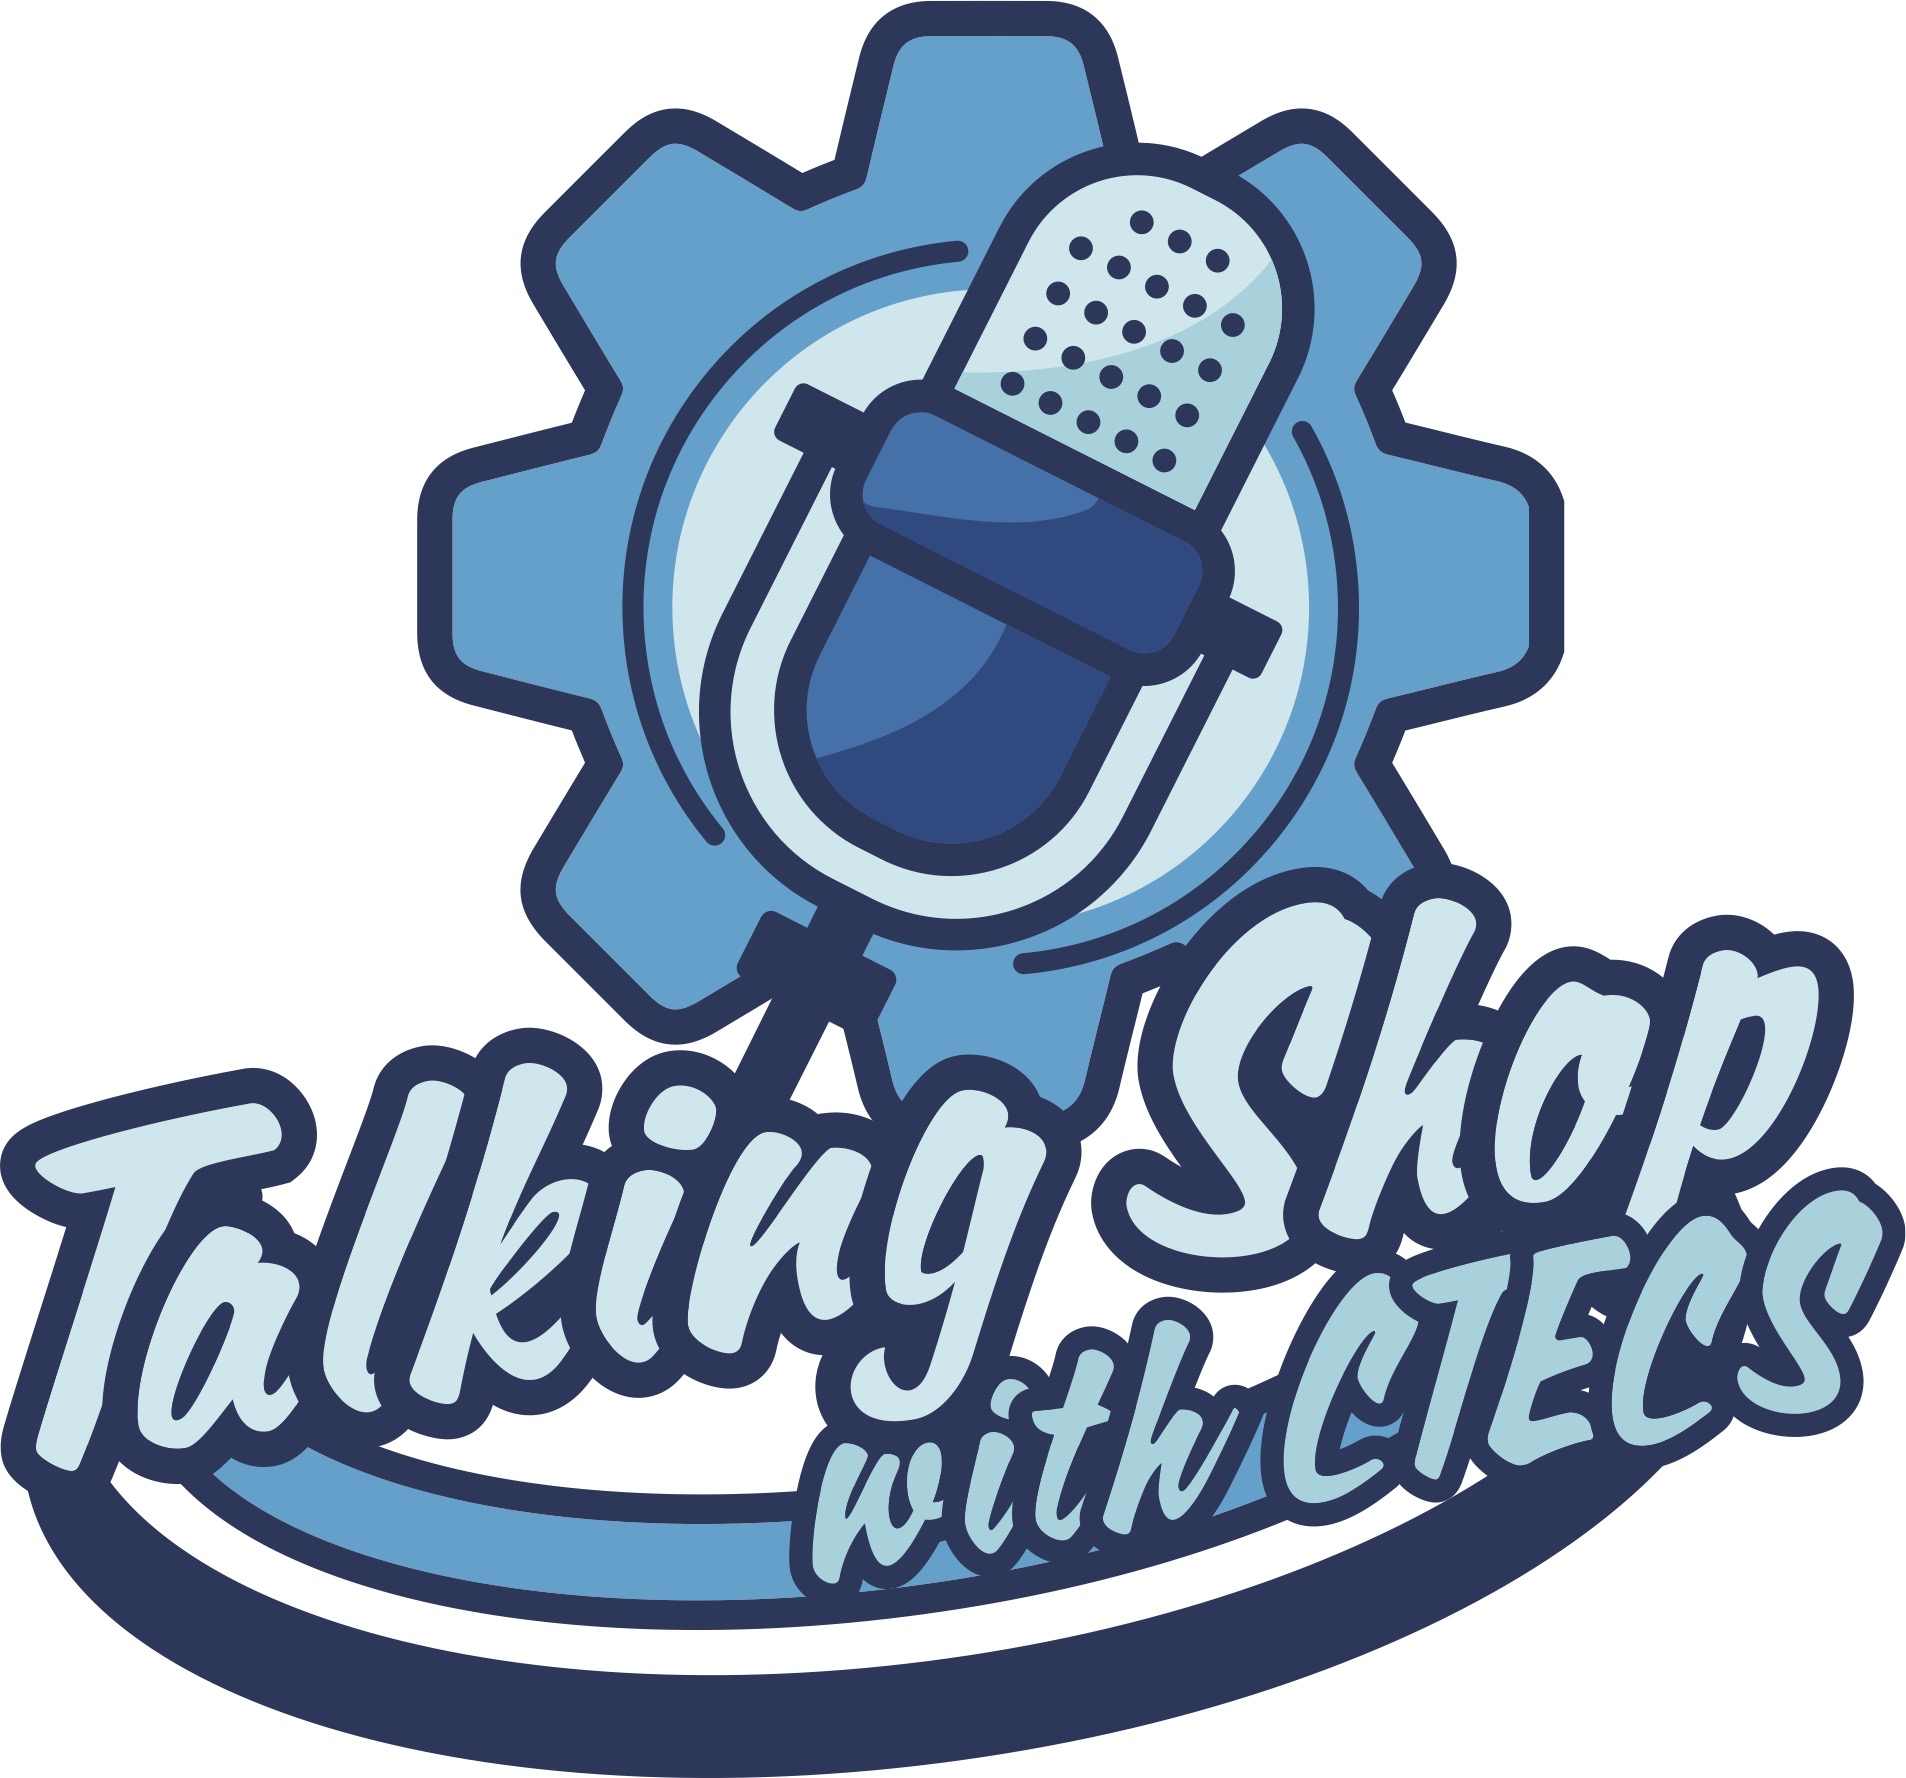 Talking Shop with CTECS logo